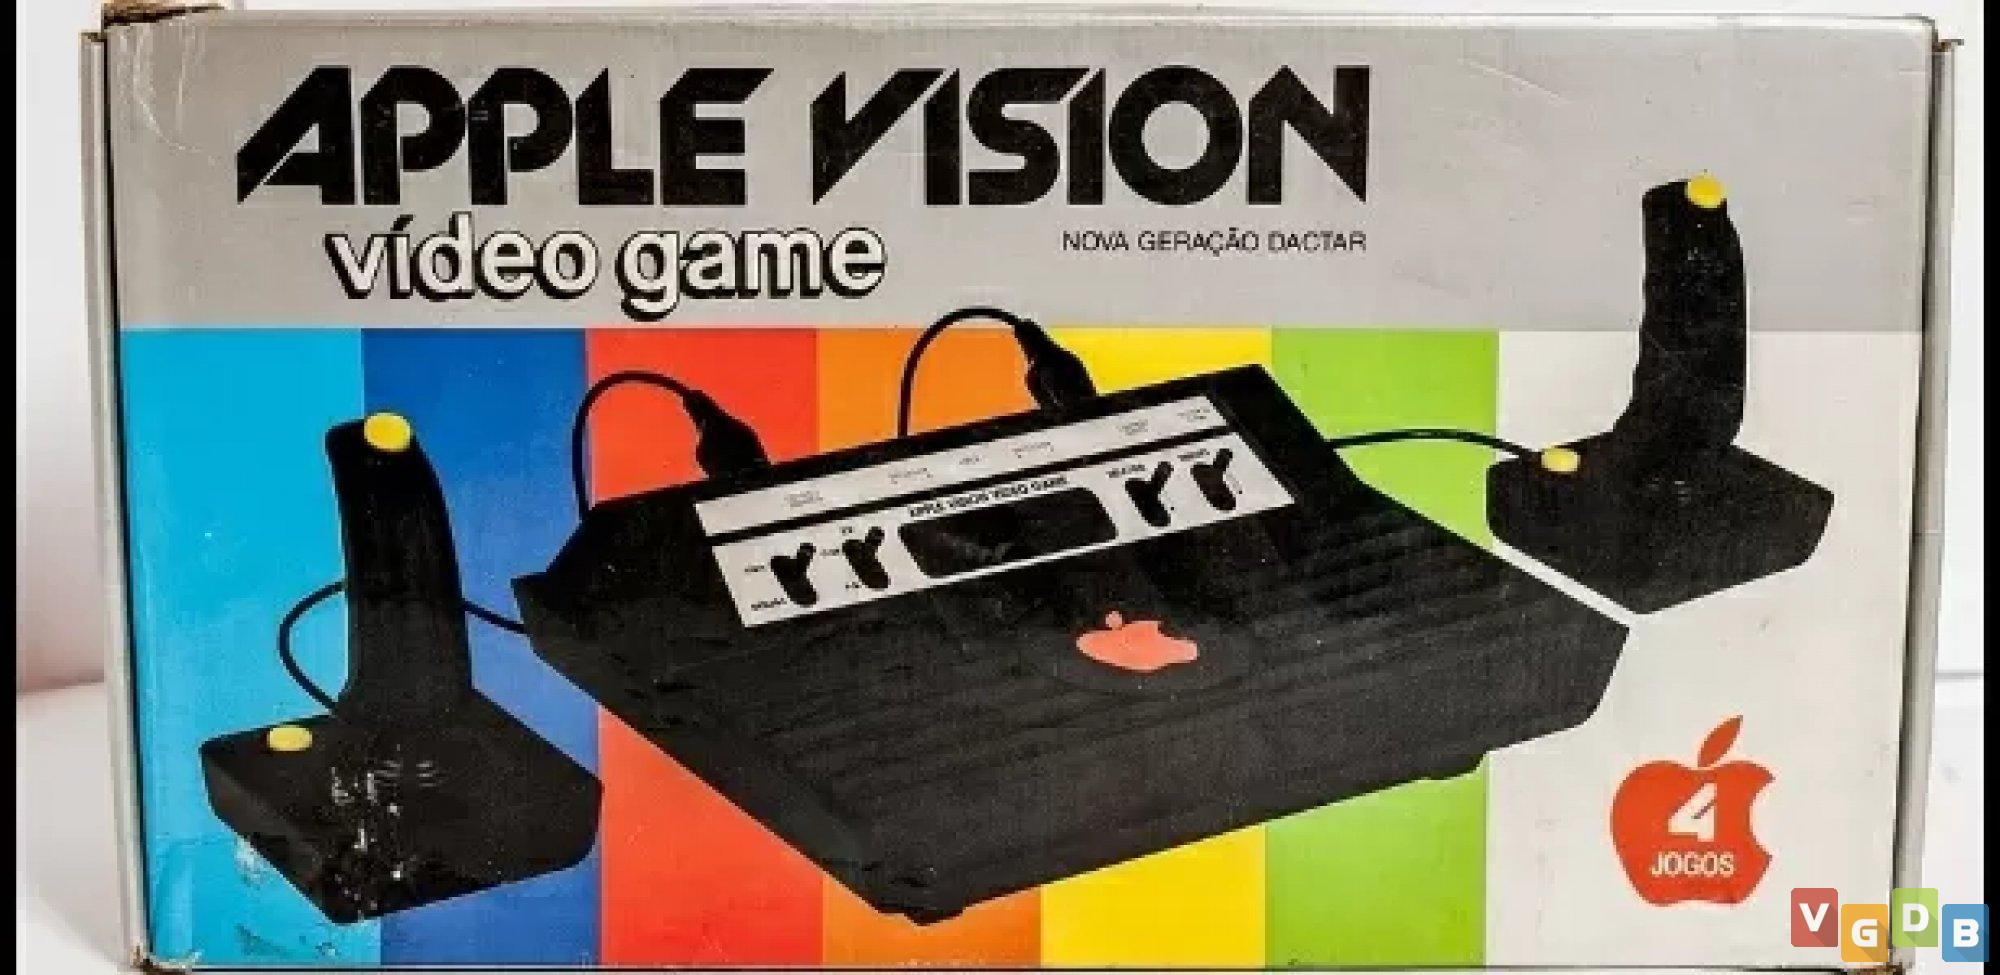 Apple Vision - VGDB - Vídeo Game Data Base